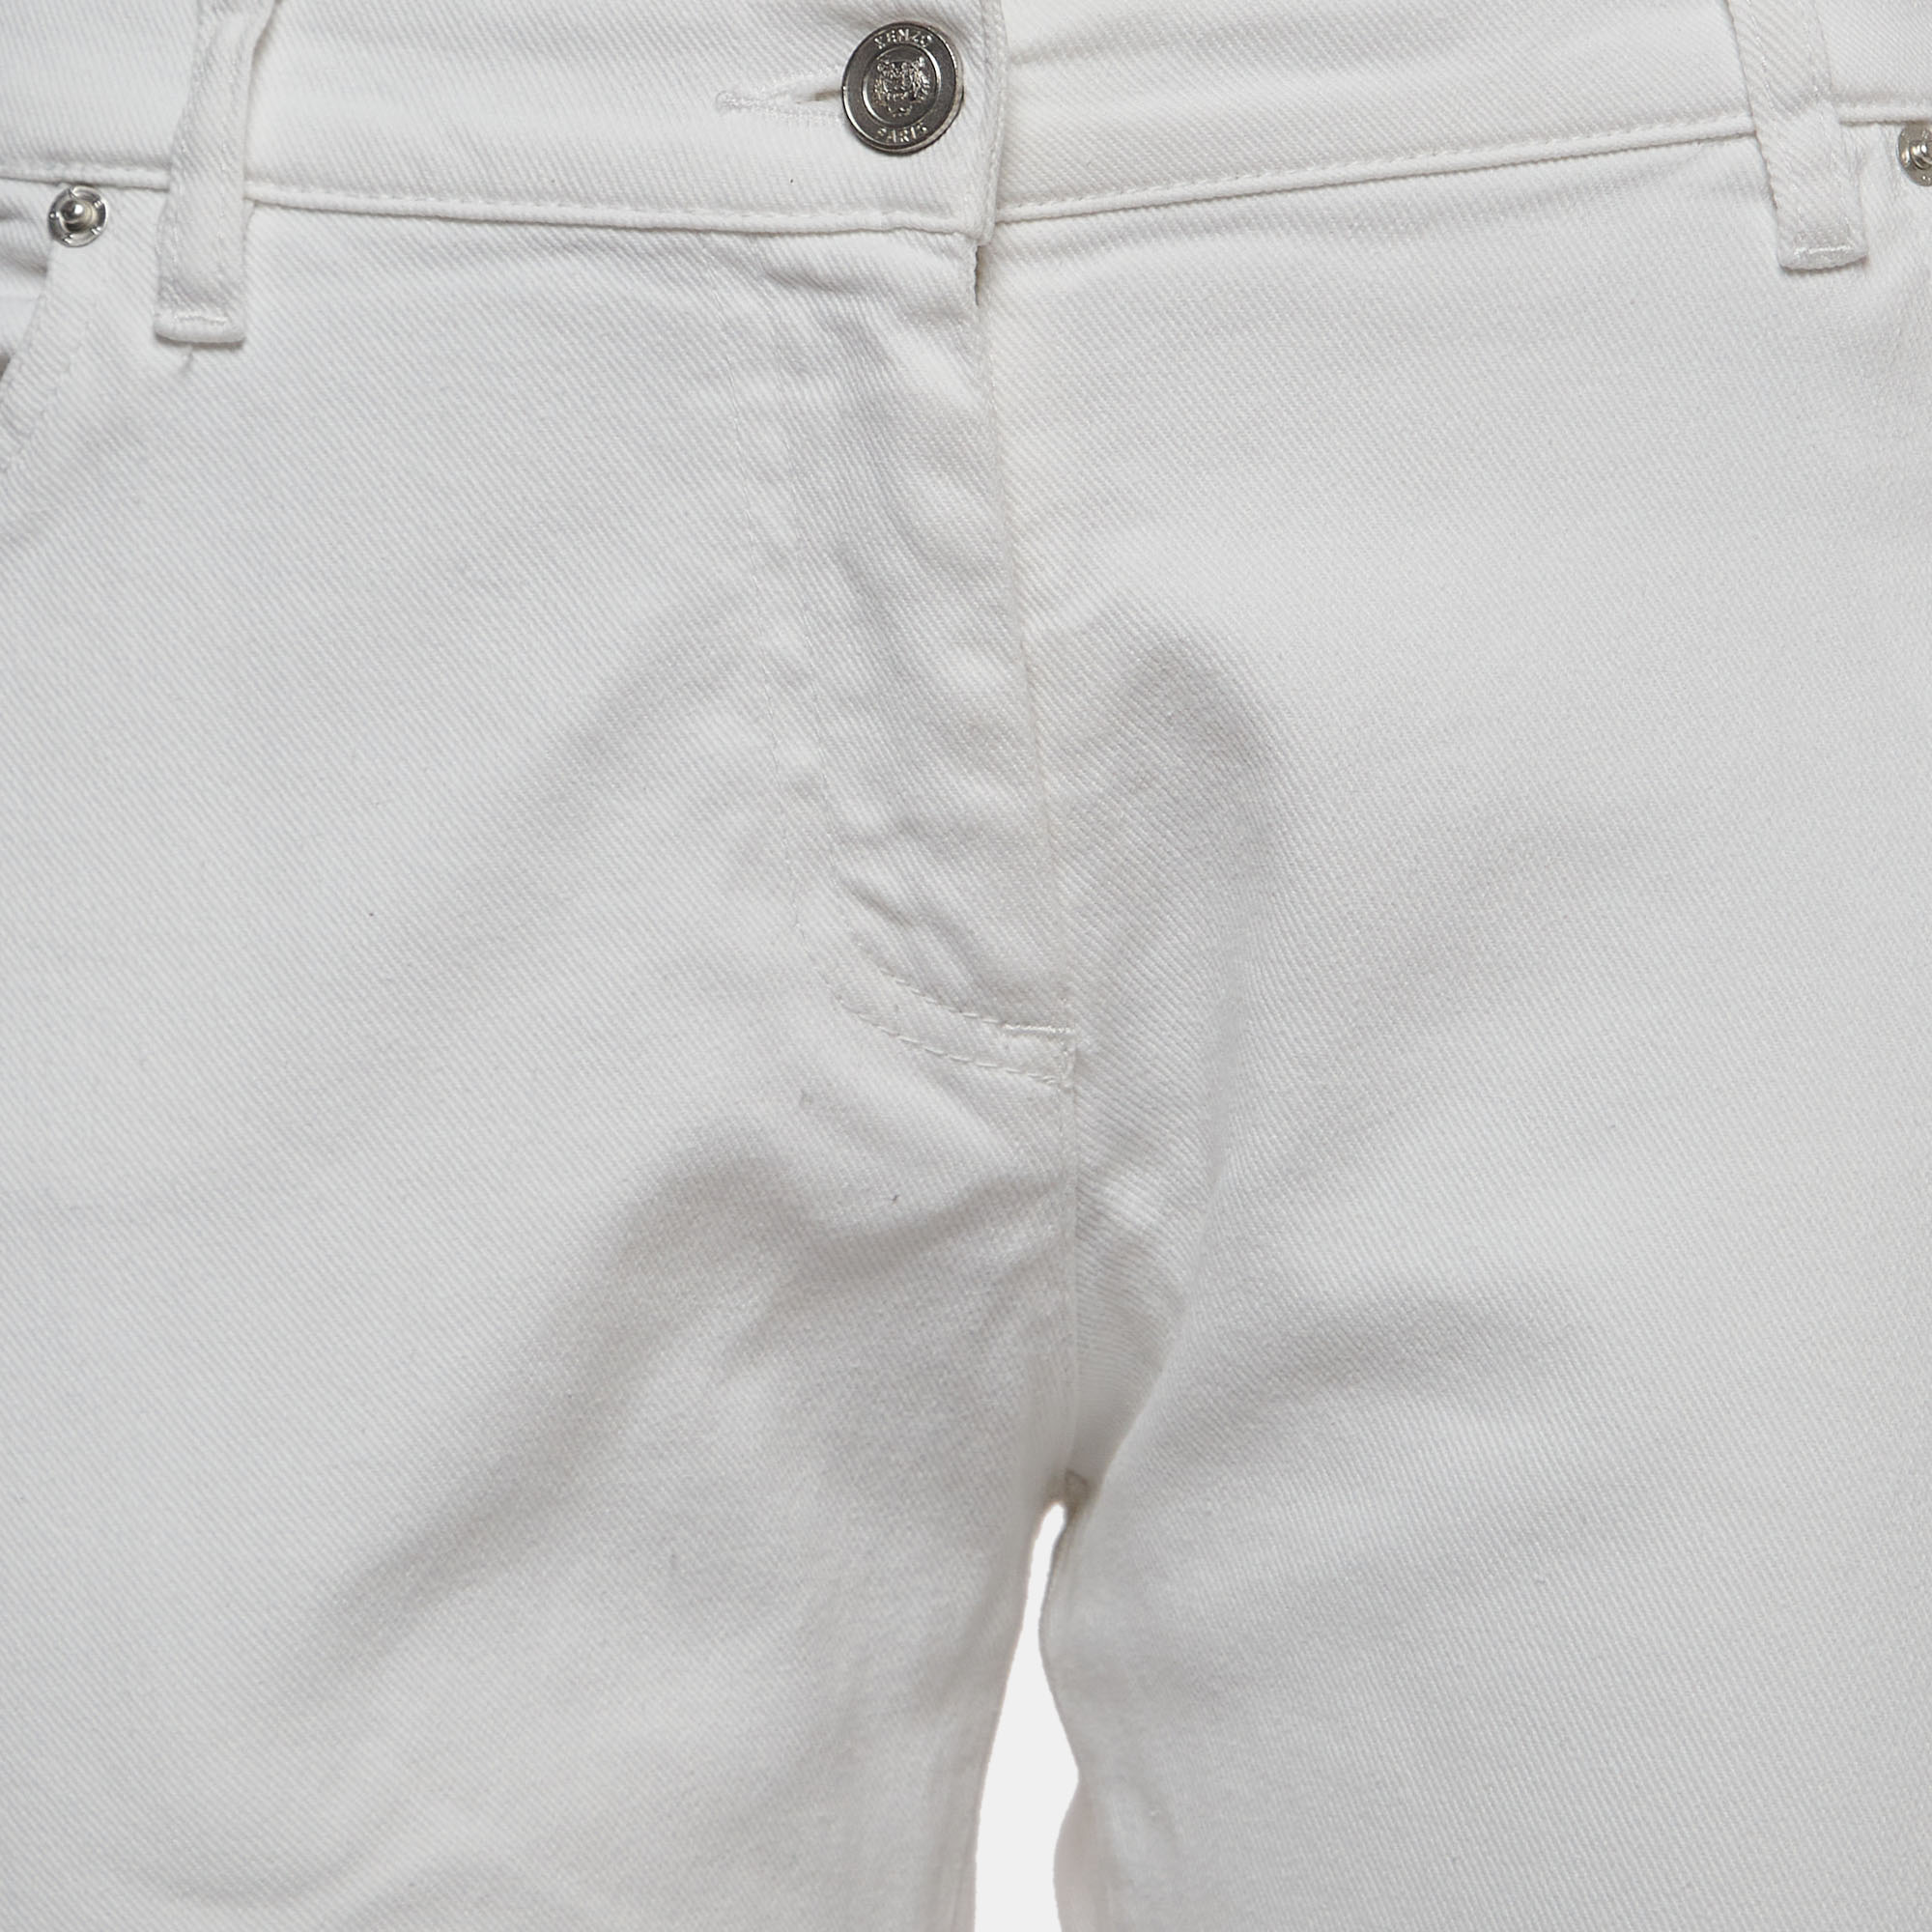 Kenzo White Denim Slim Fit Jeans S